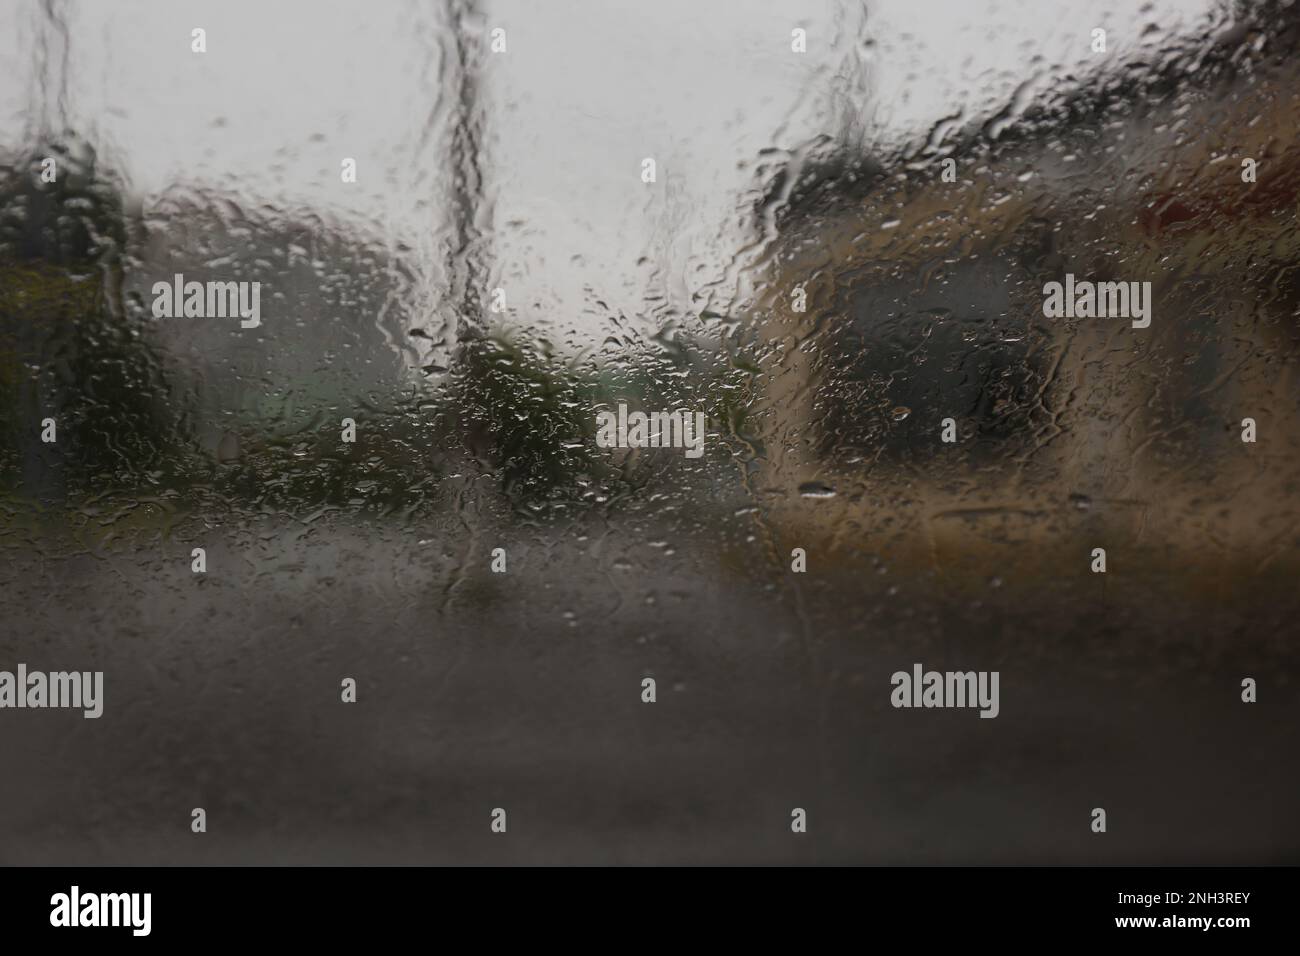 Rain drops on window glass, closeup. View from inside Stock Photo